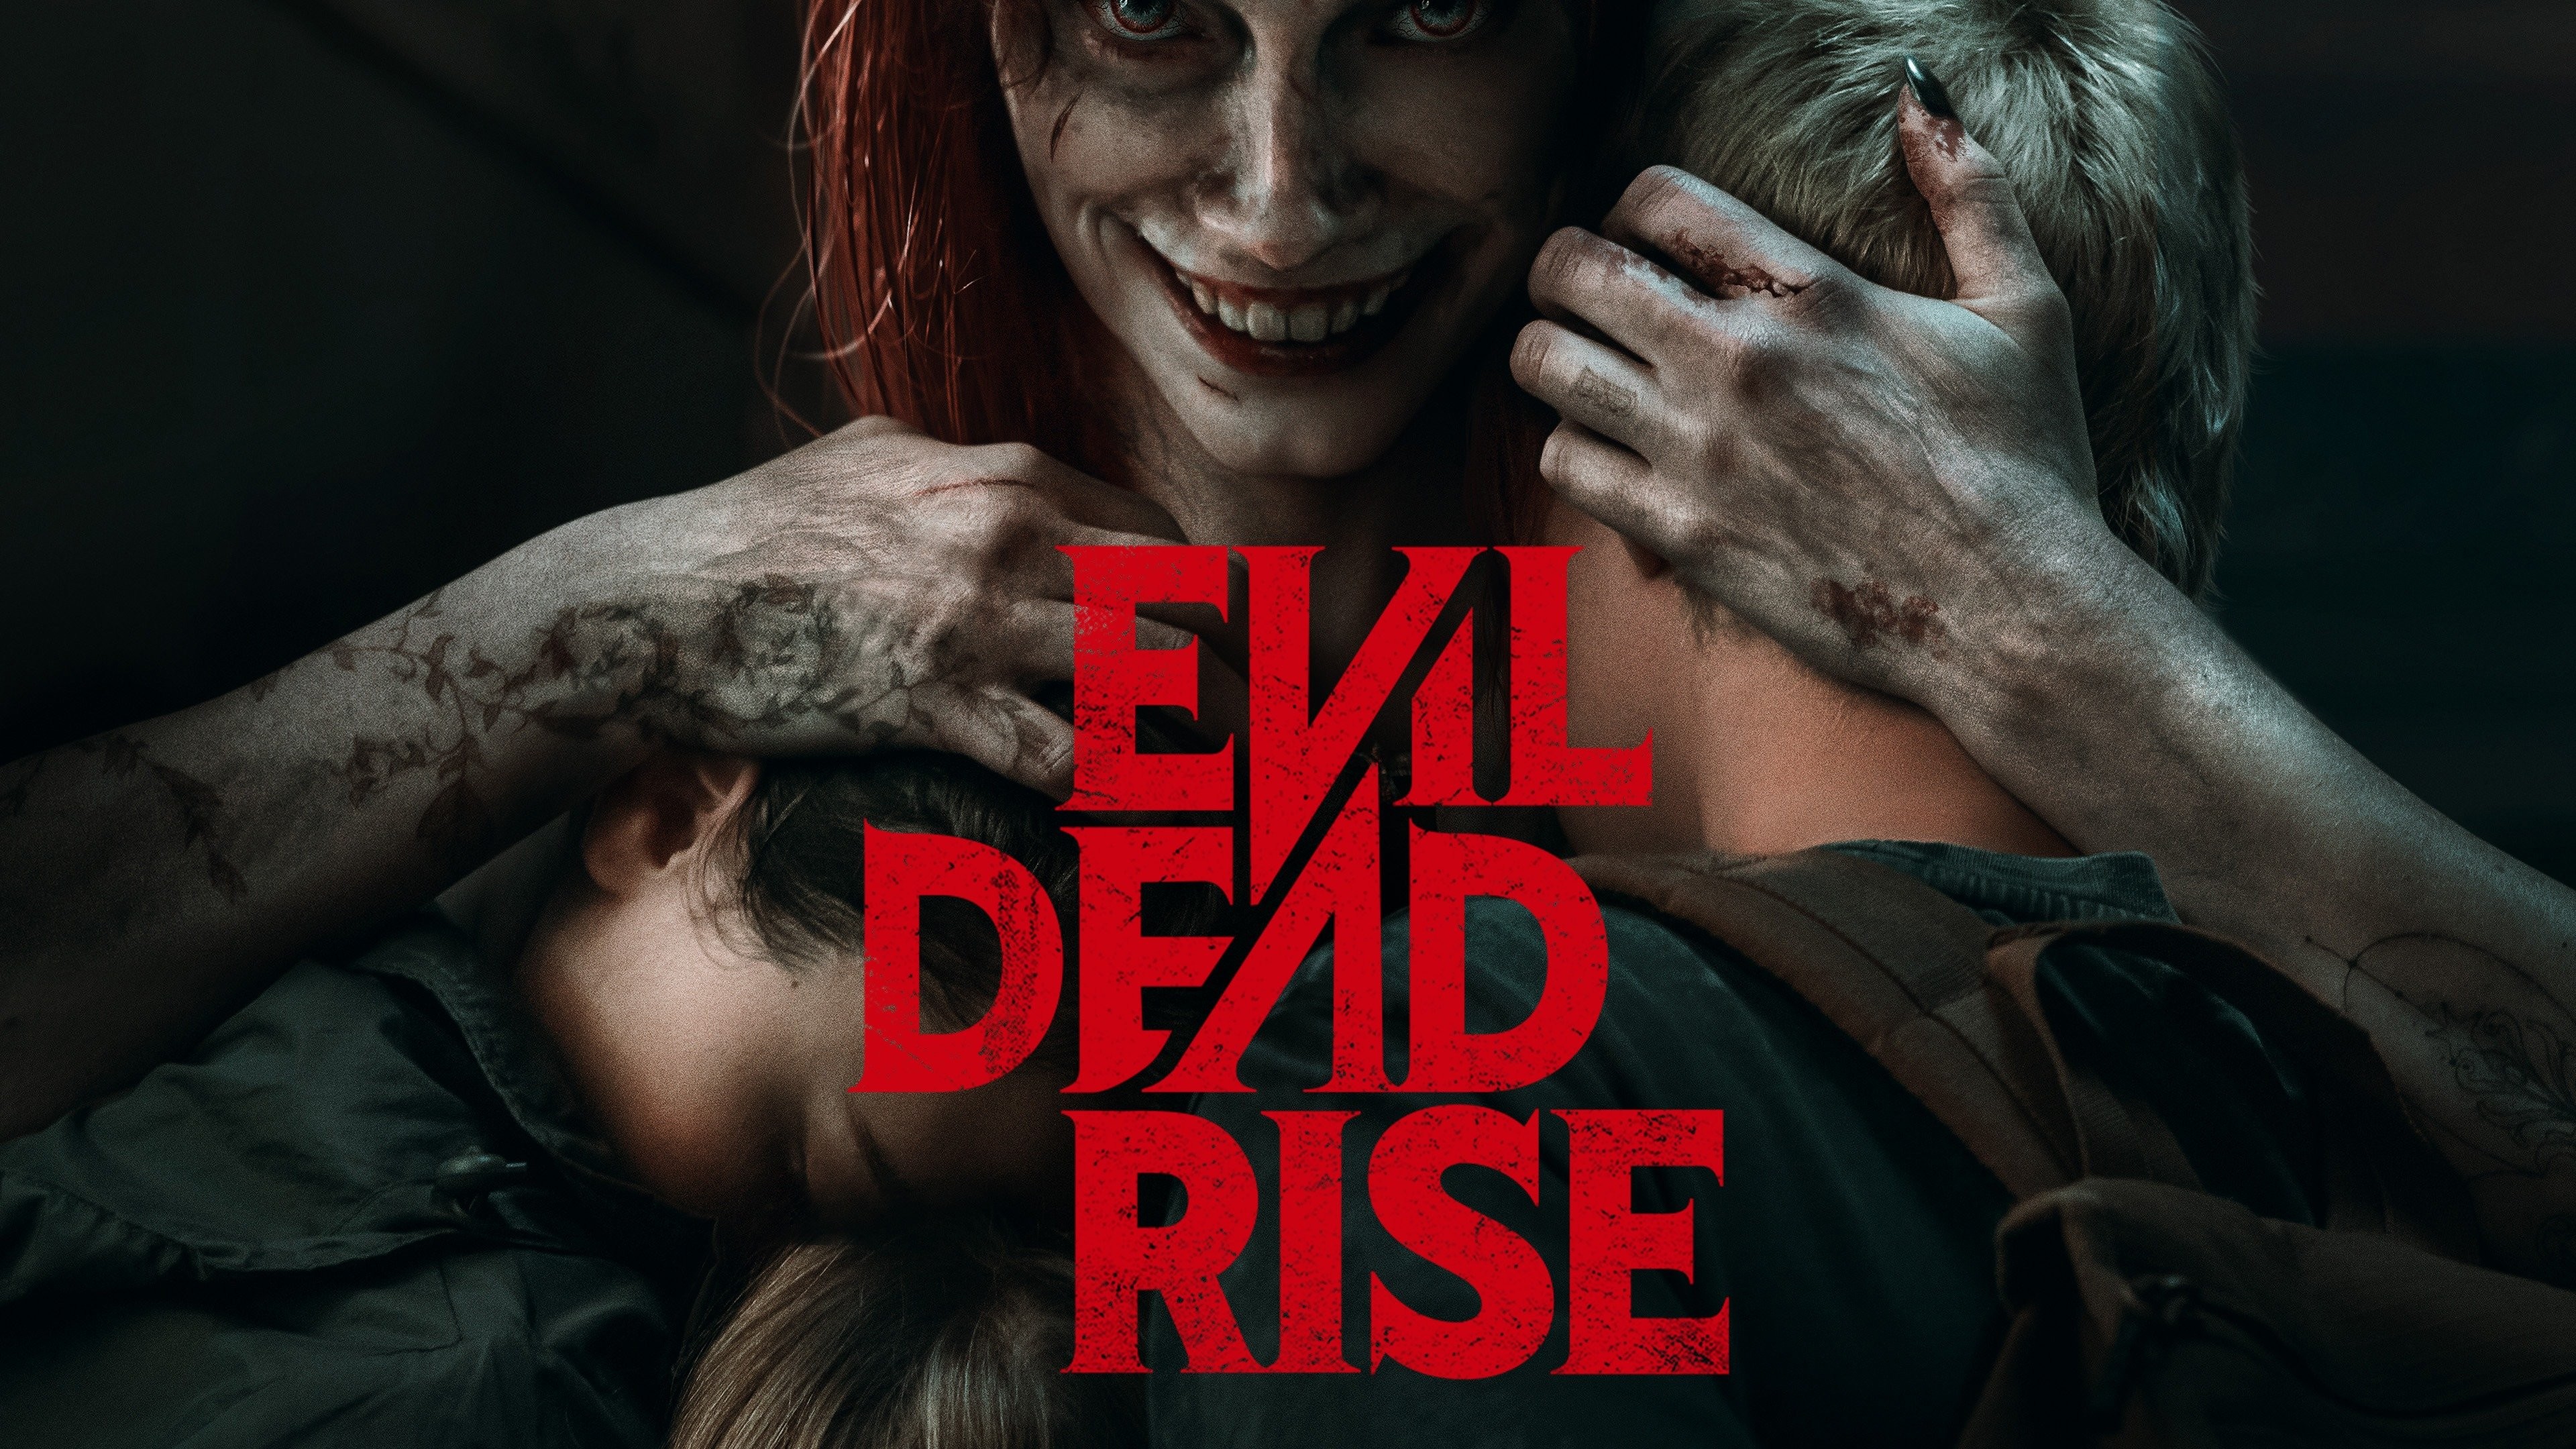 Evil Dead Rise - Rotten Tomatoes